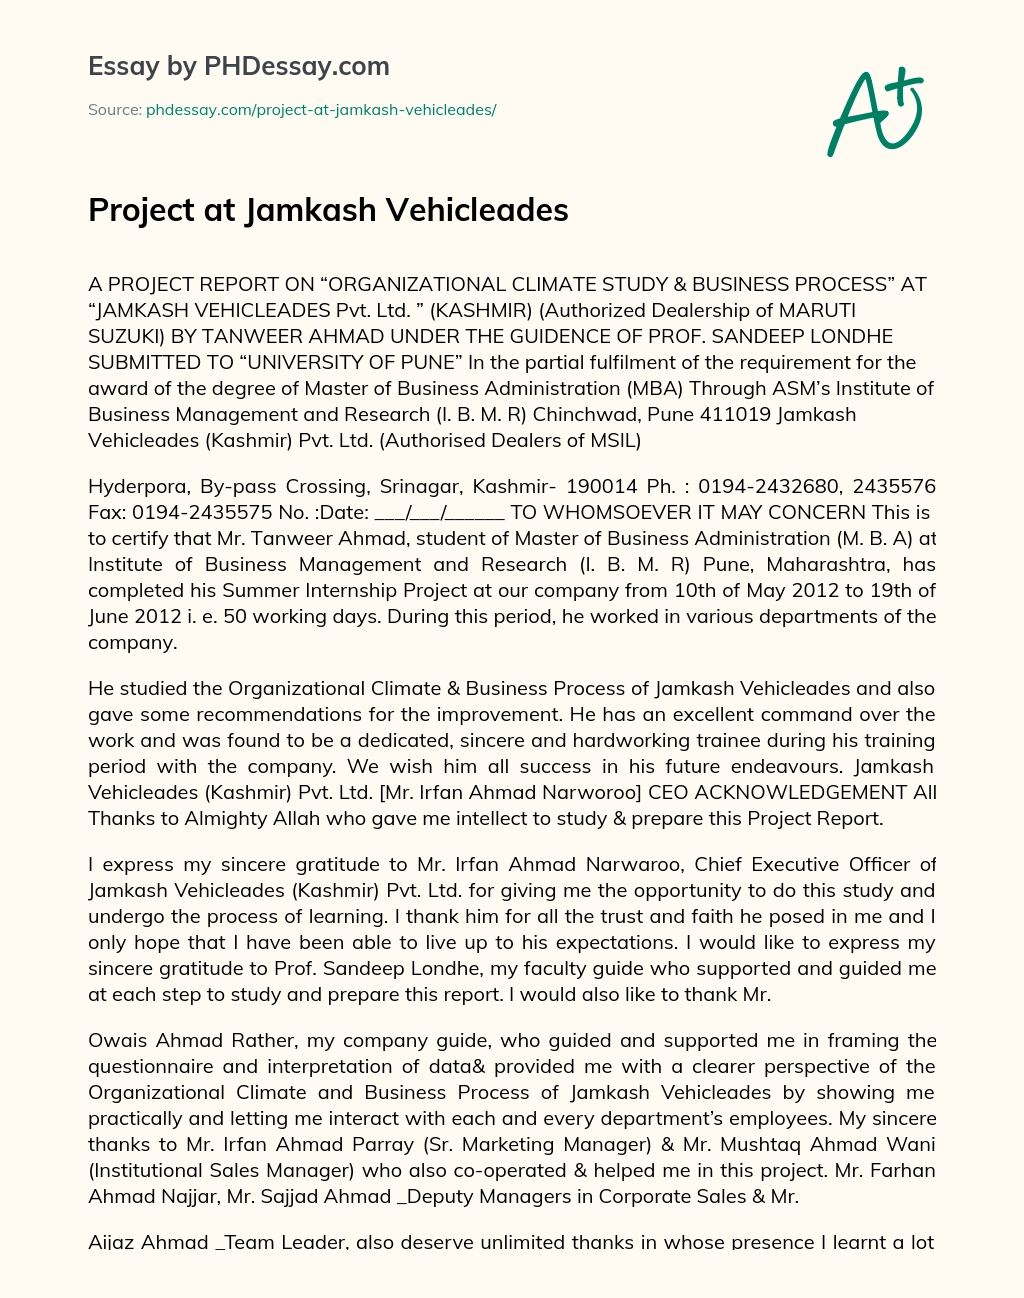 Project at Jamkash Vehicleades essay